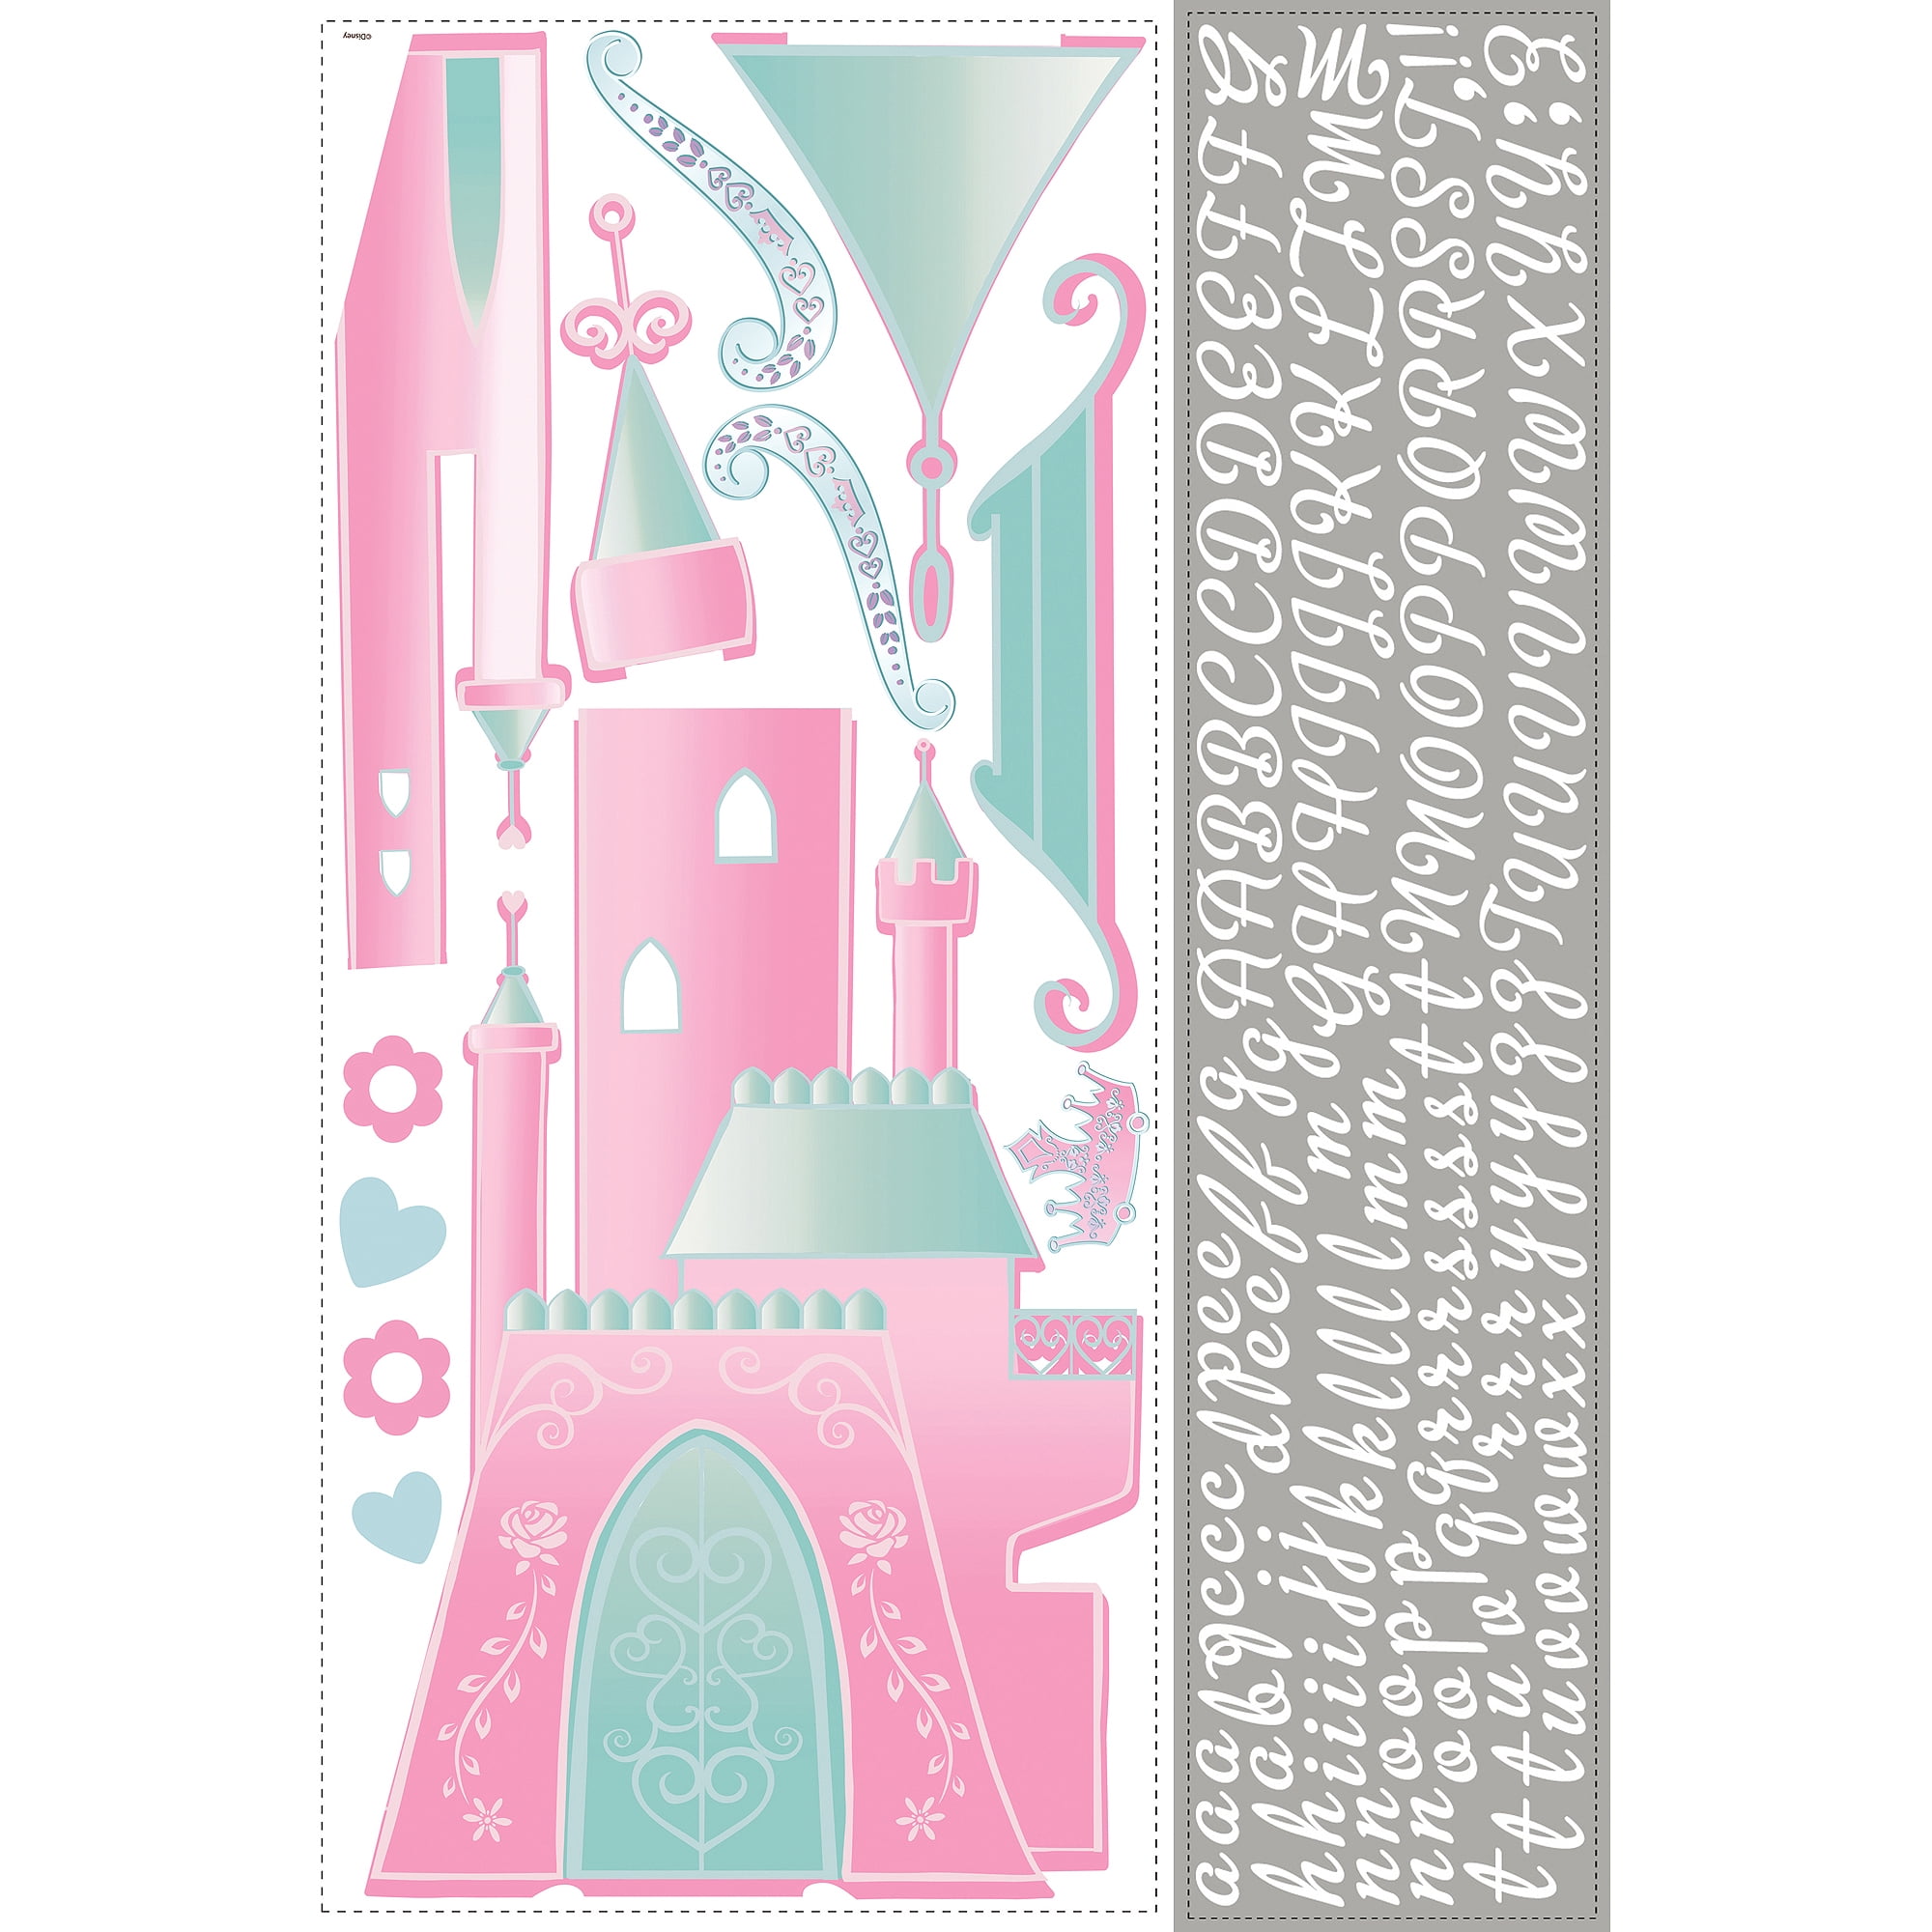 RoomMates Disney Princess Castle Wall Stickers